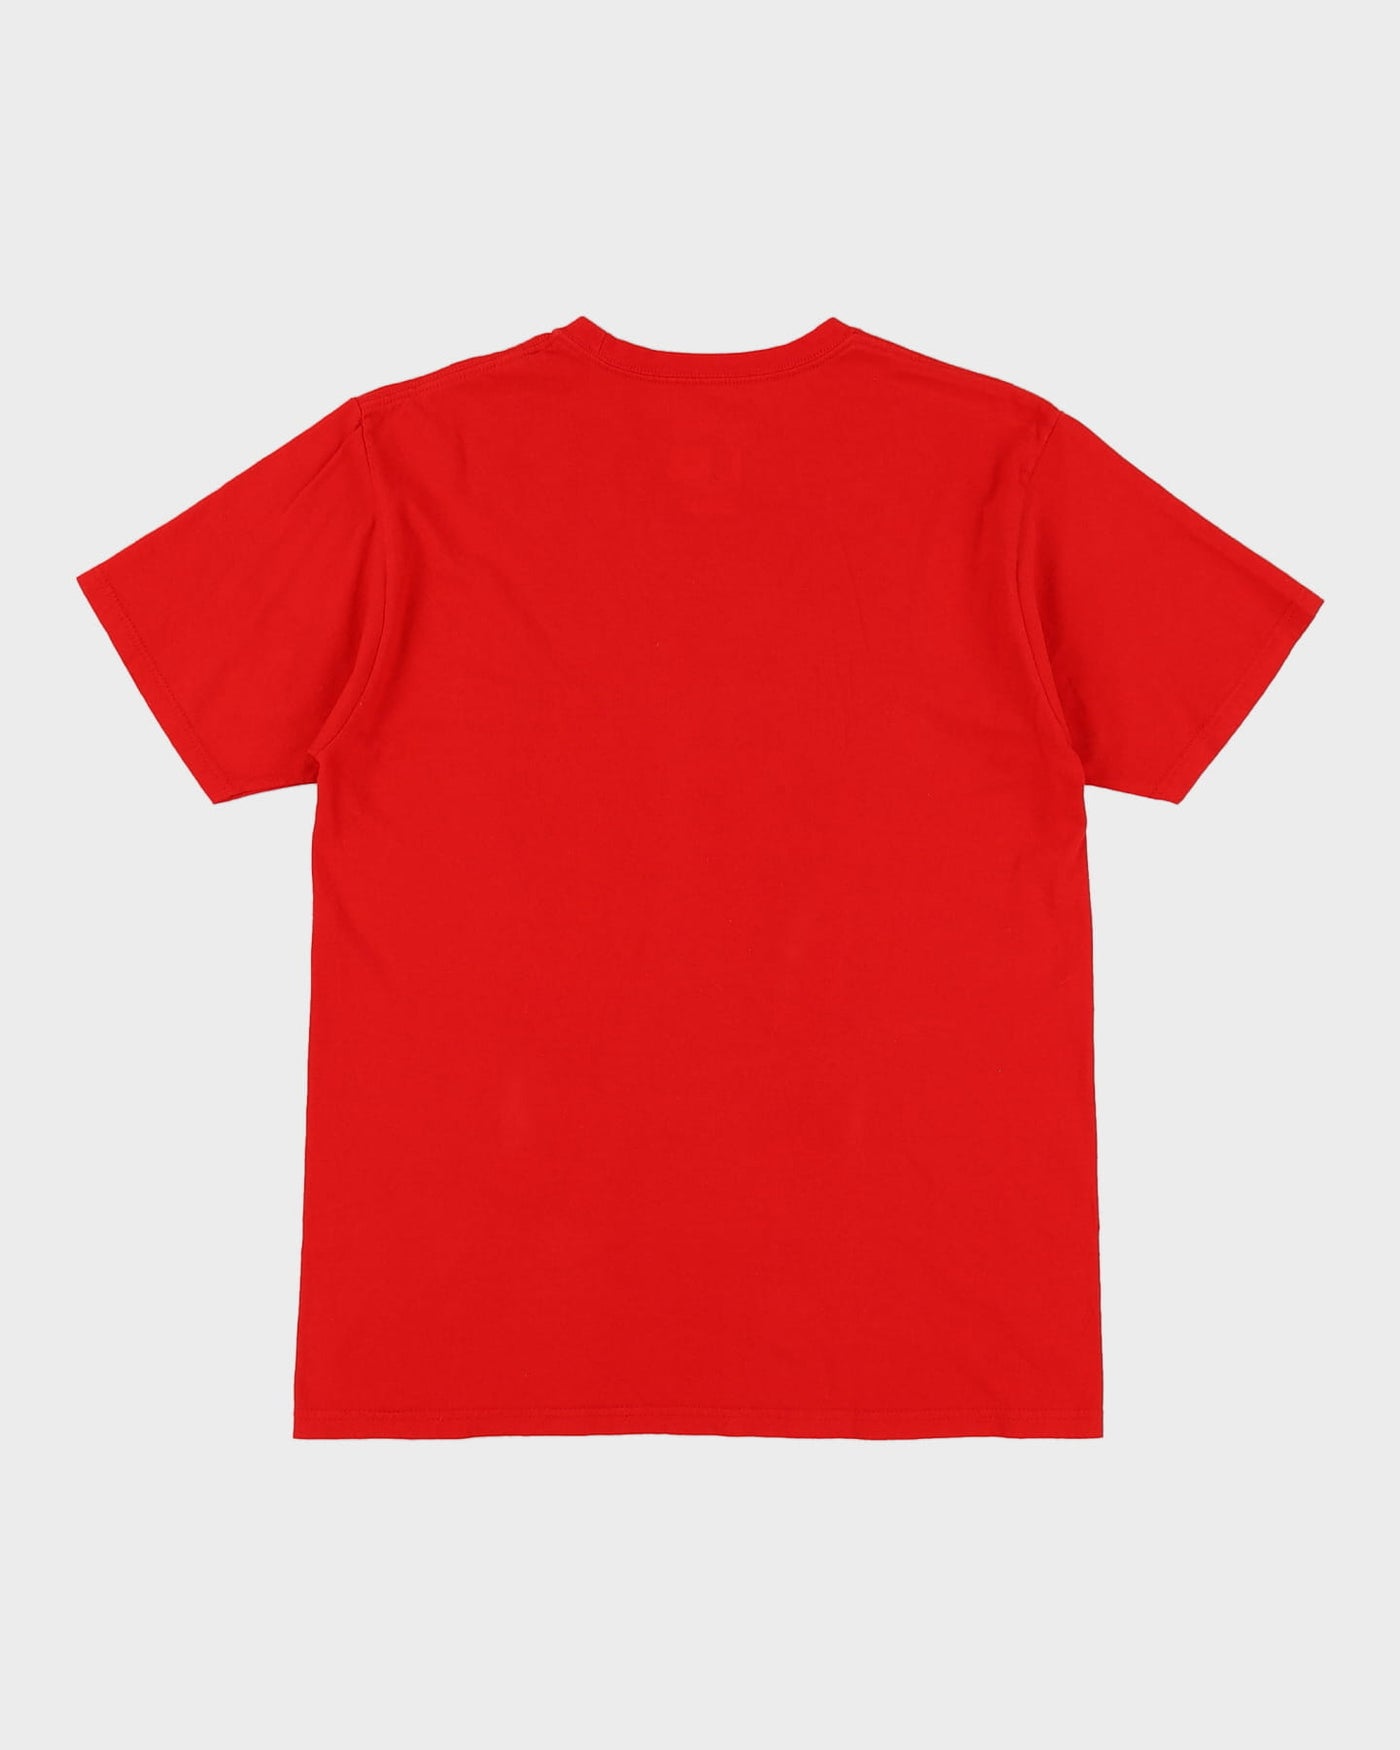 Adizero Derrick Rose Red Graphic T-Shirt - L